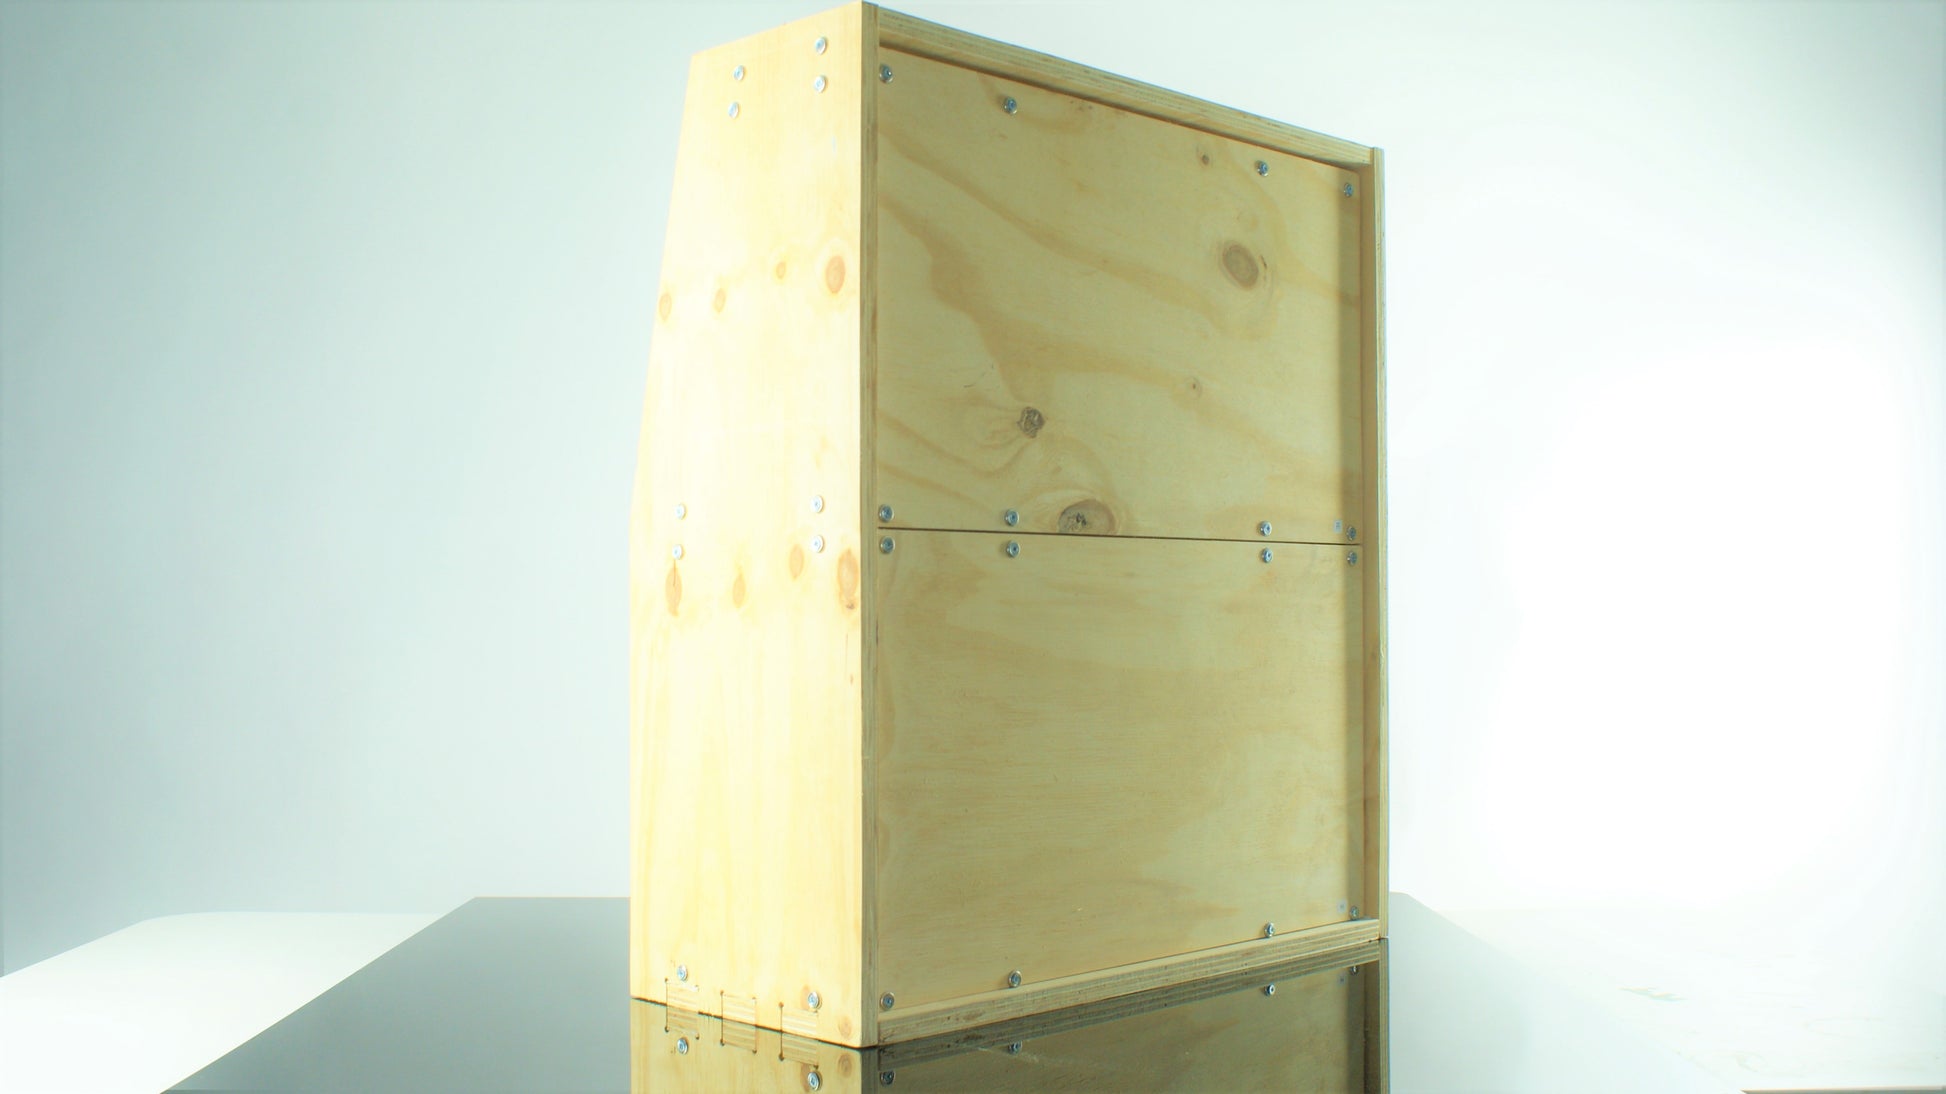 4x12" Sloped 18mm Guitar Bass Speaker Cabinet - DIY Self Build Kit